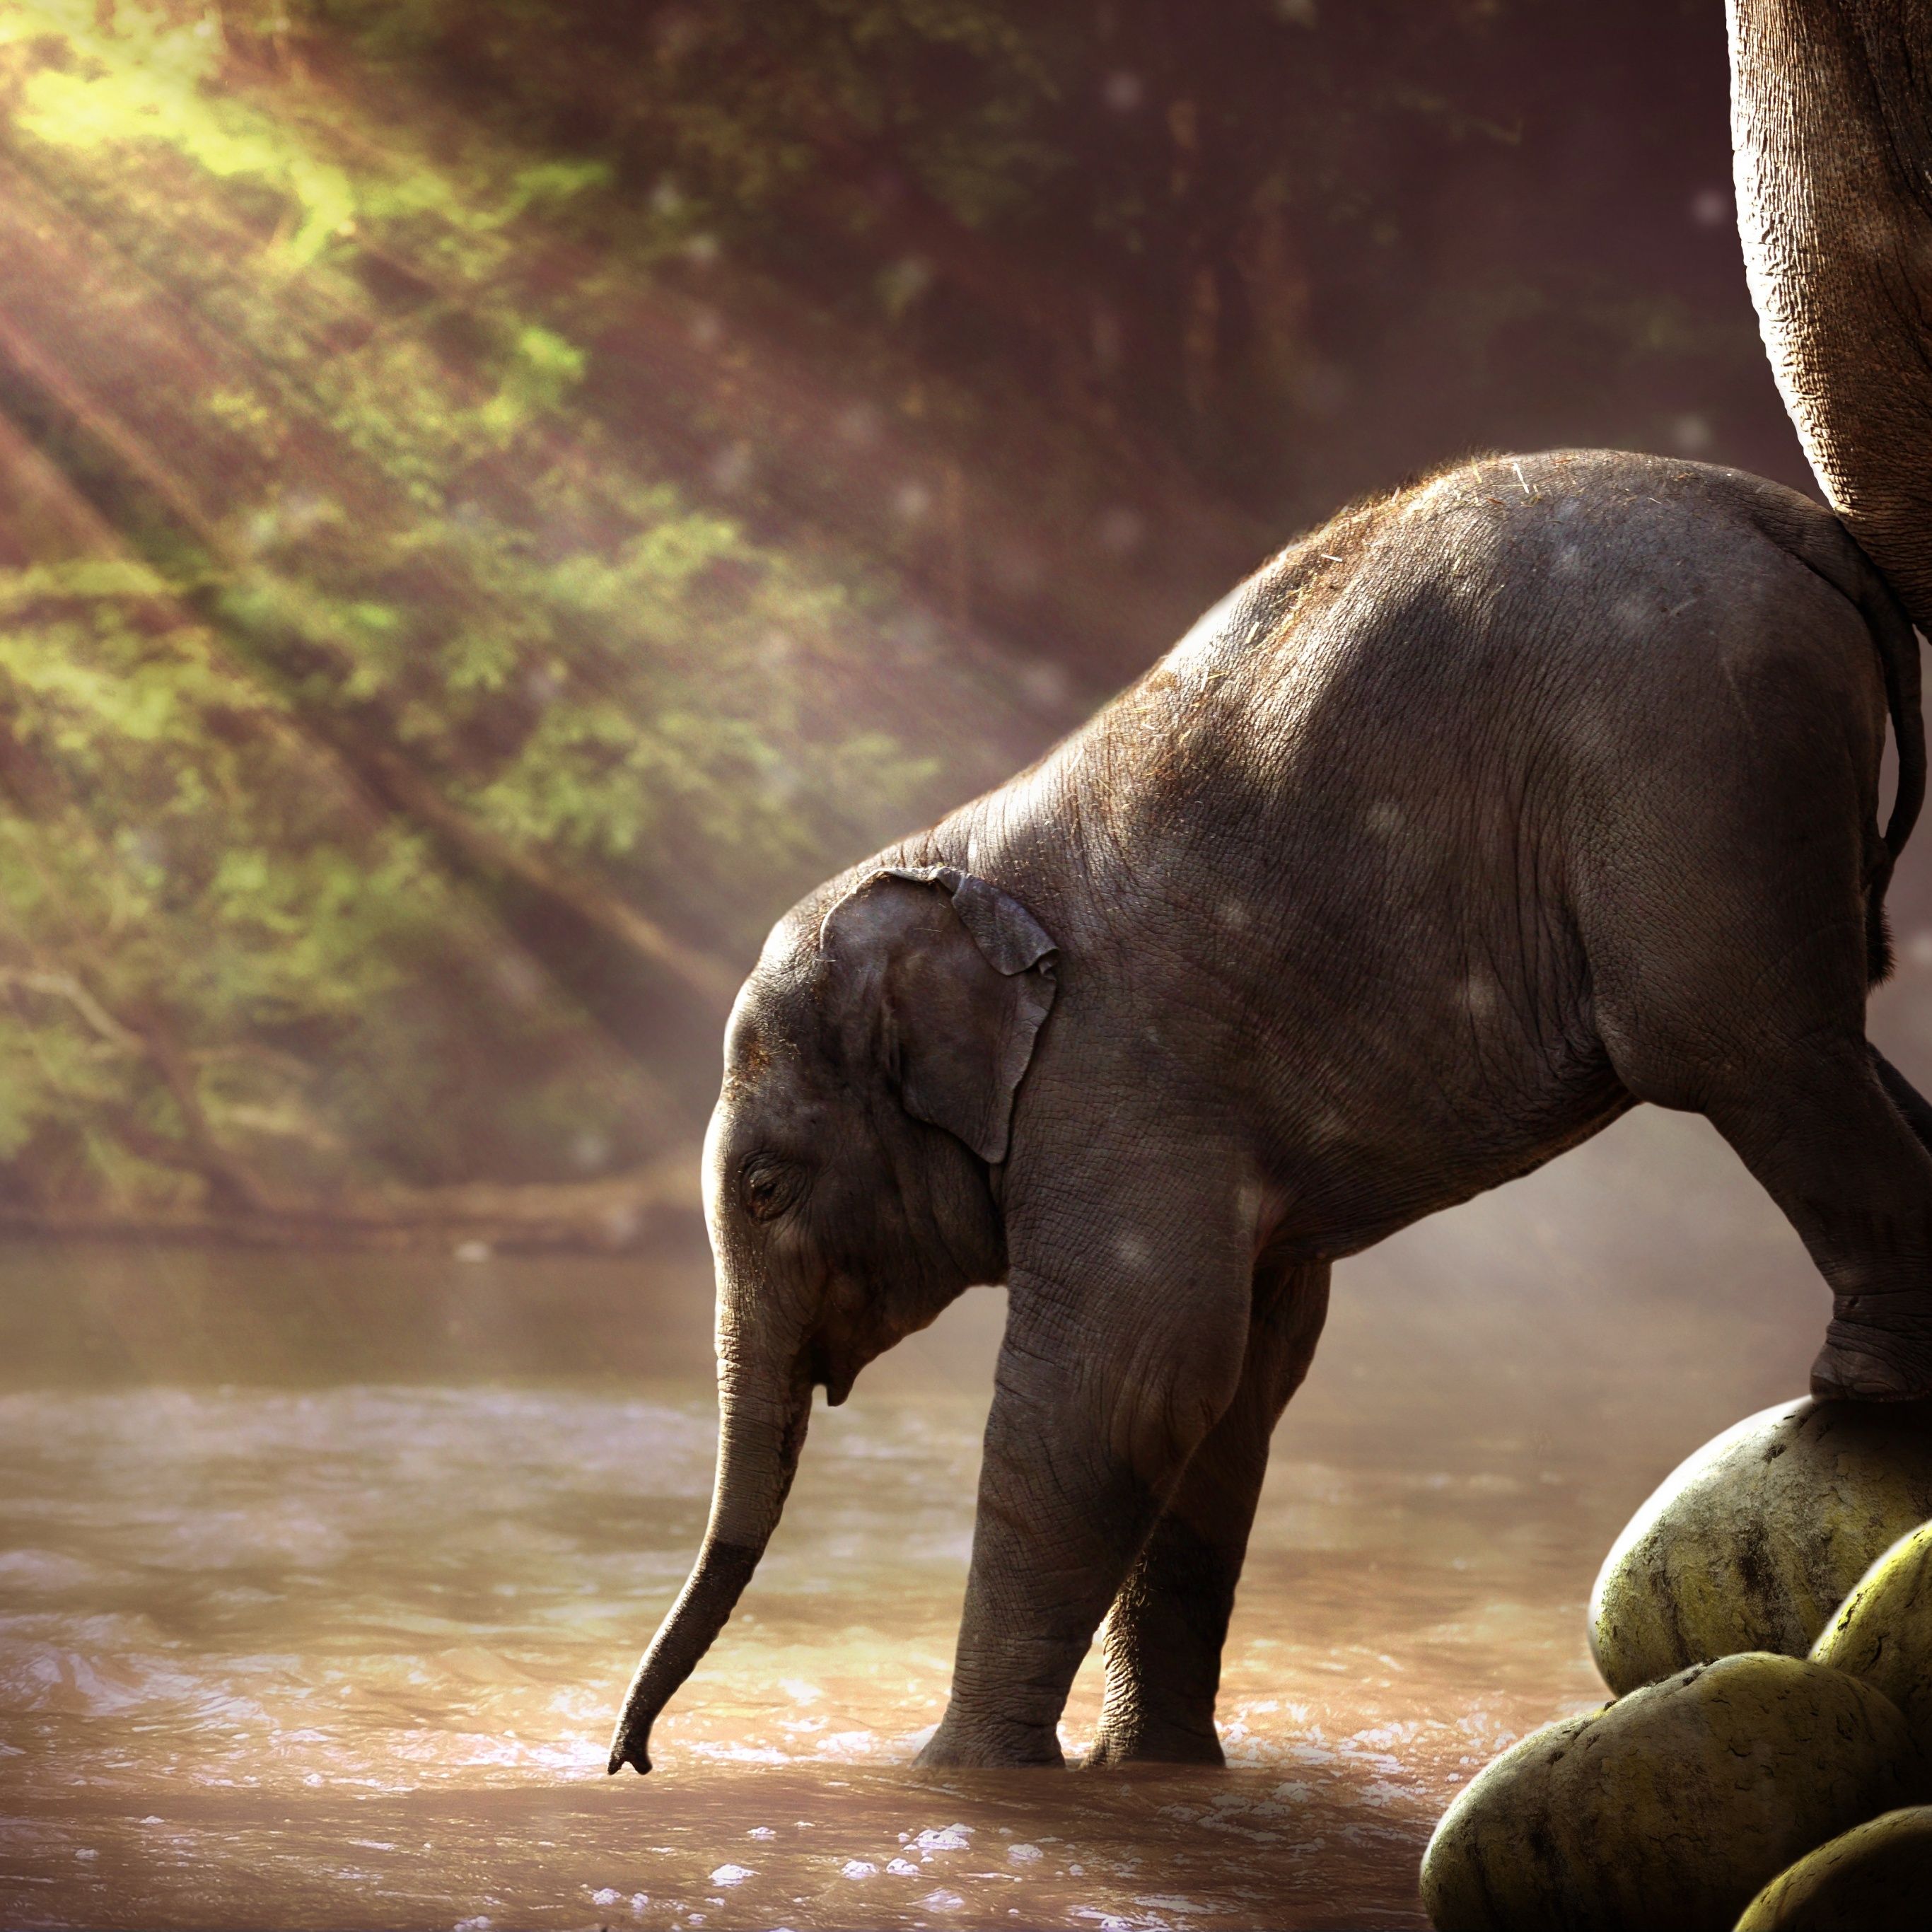  Elefant Hintergrundbild 2732x2732. Elephant cub Wallpaper 4K, Rocks, River, Sun rays, Animals